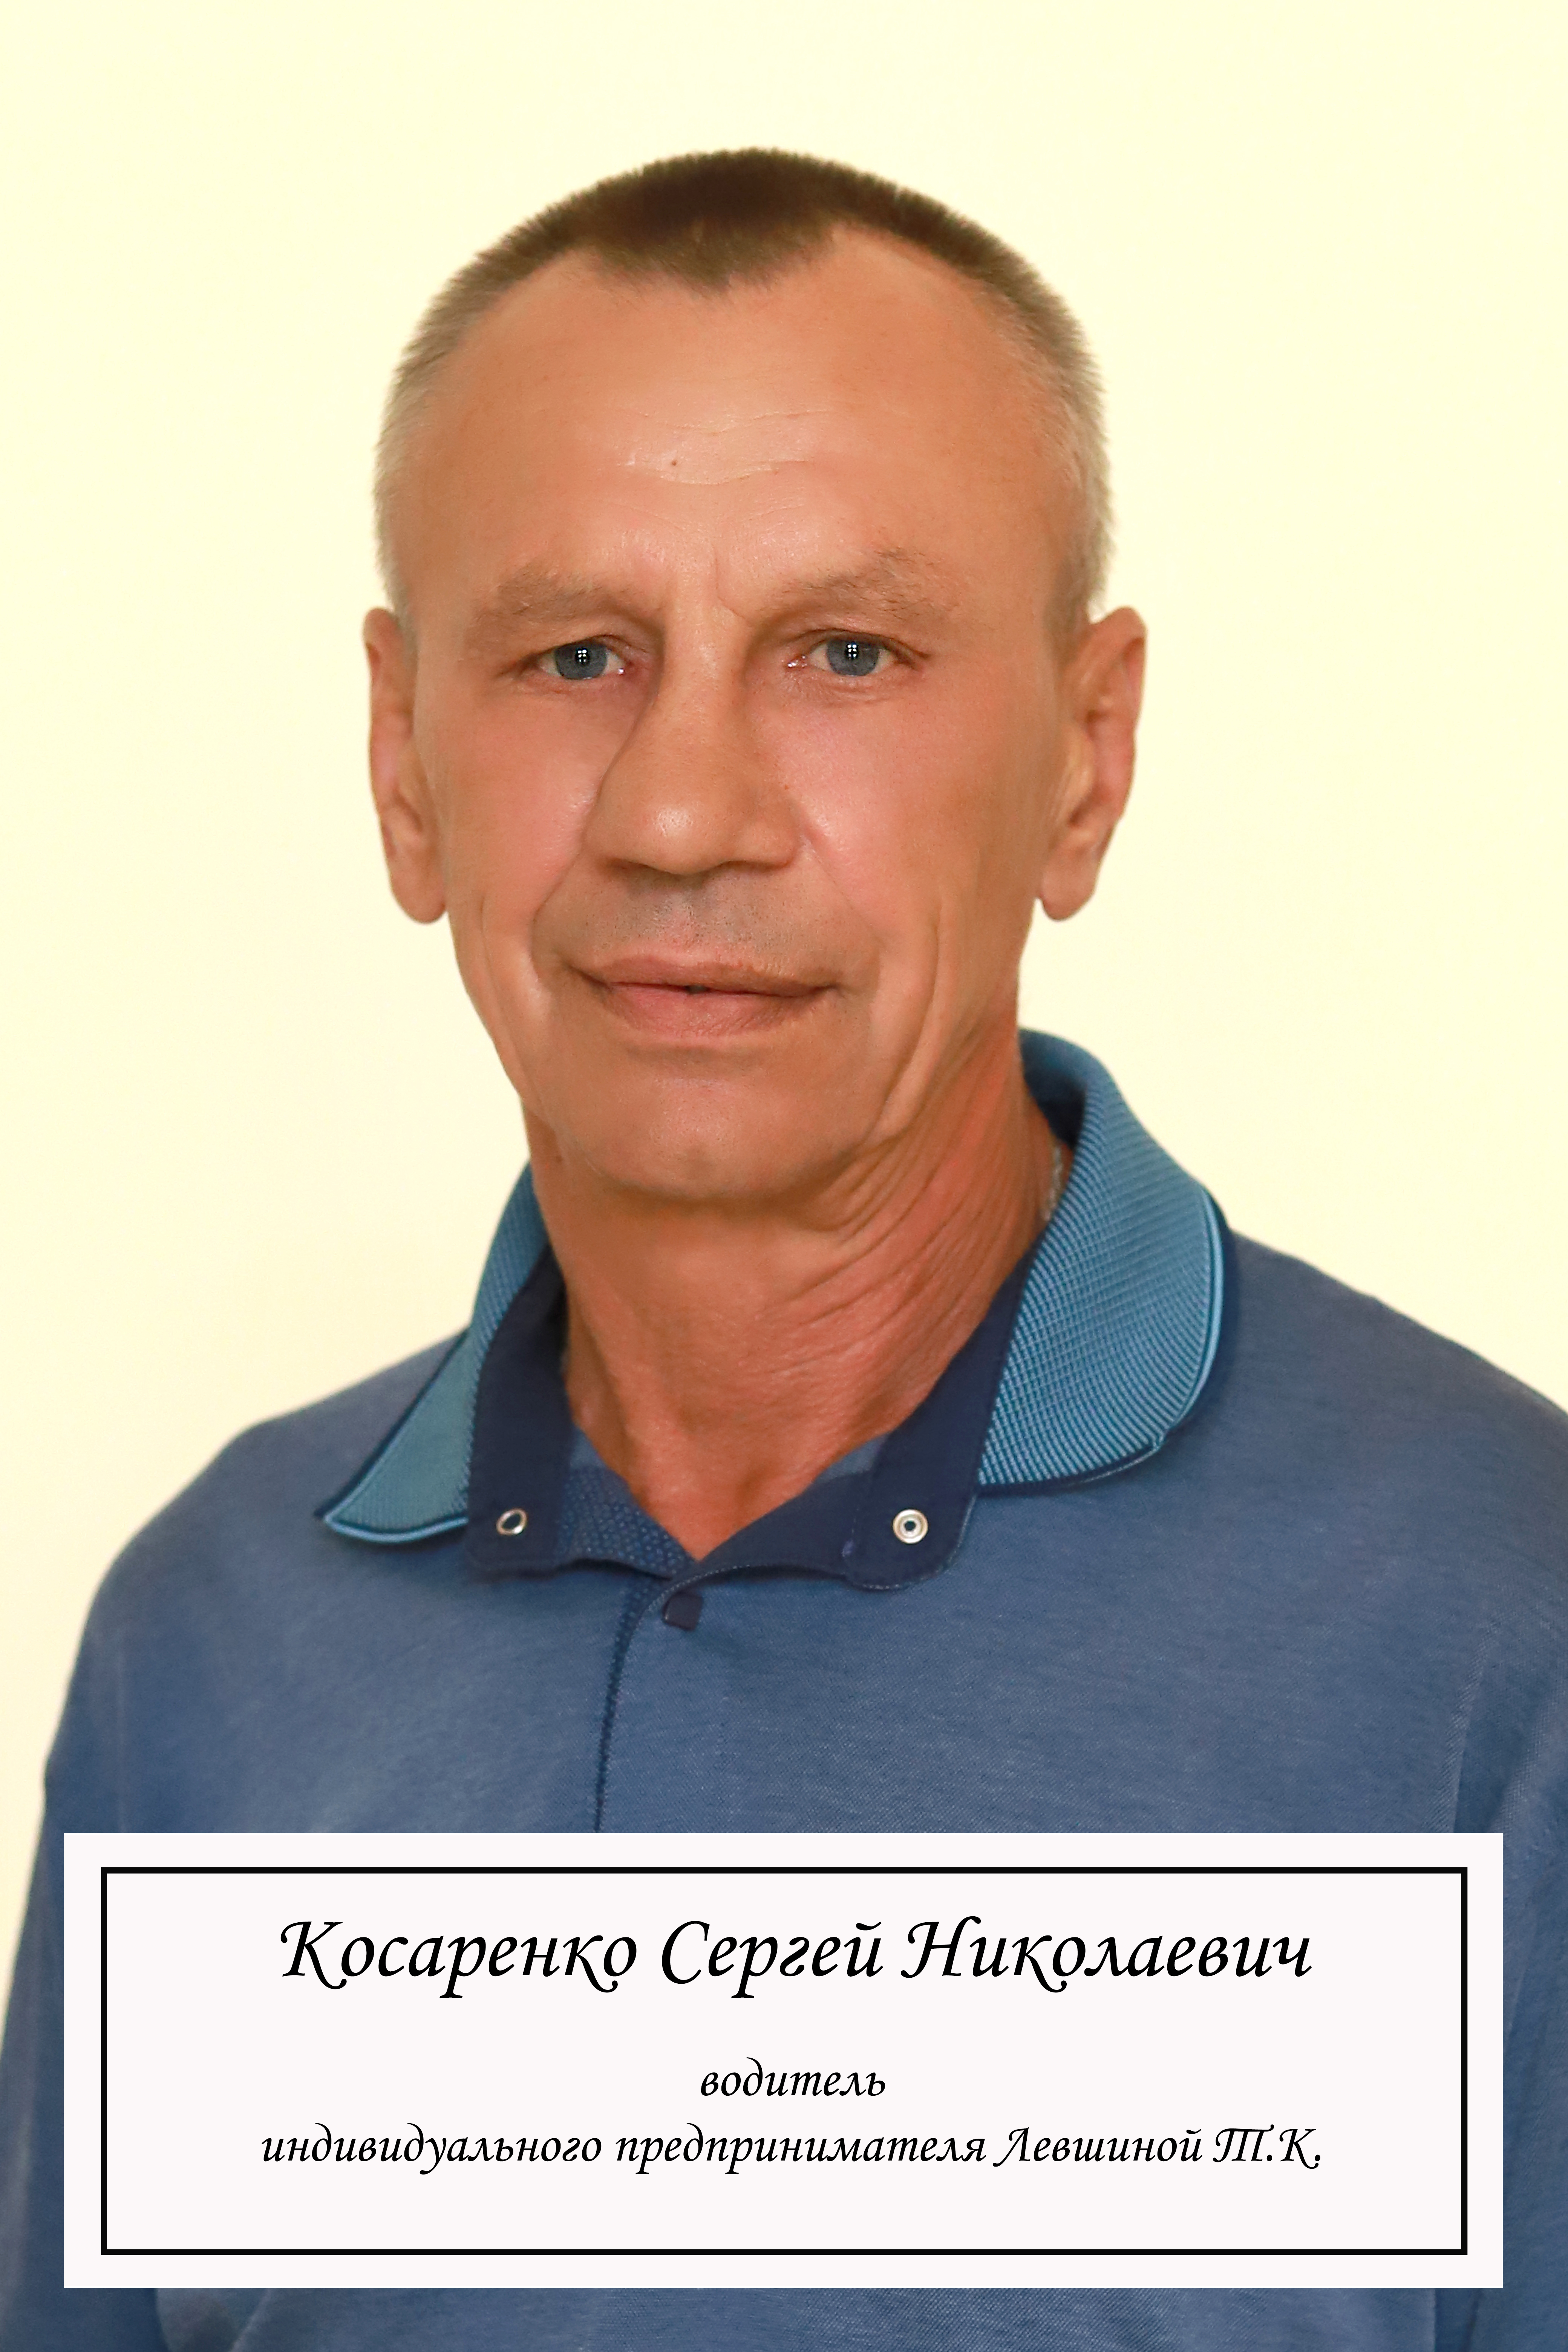 Косаренко Сергей Николаевич.